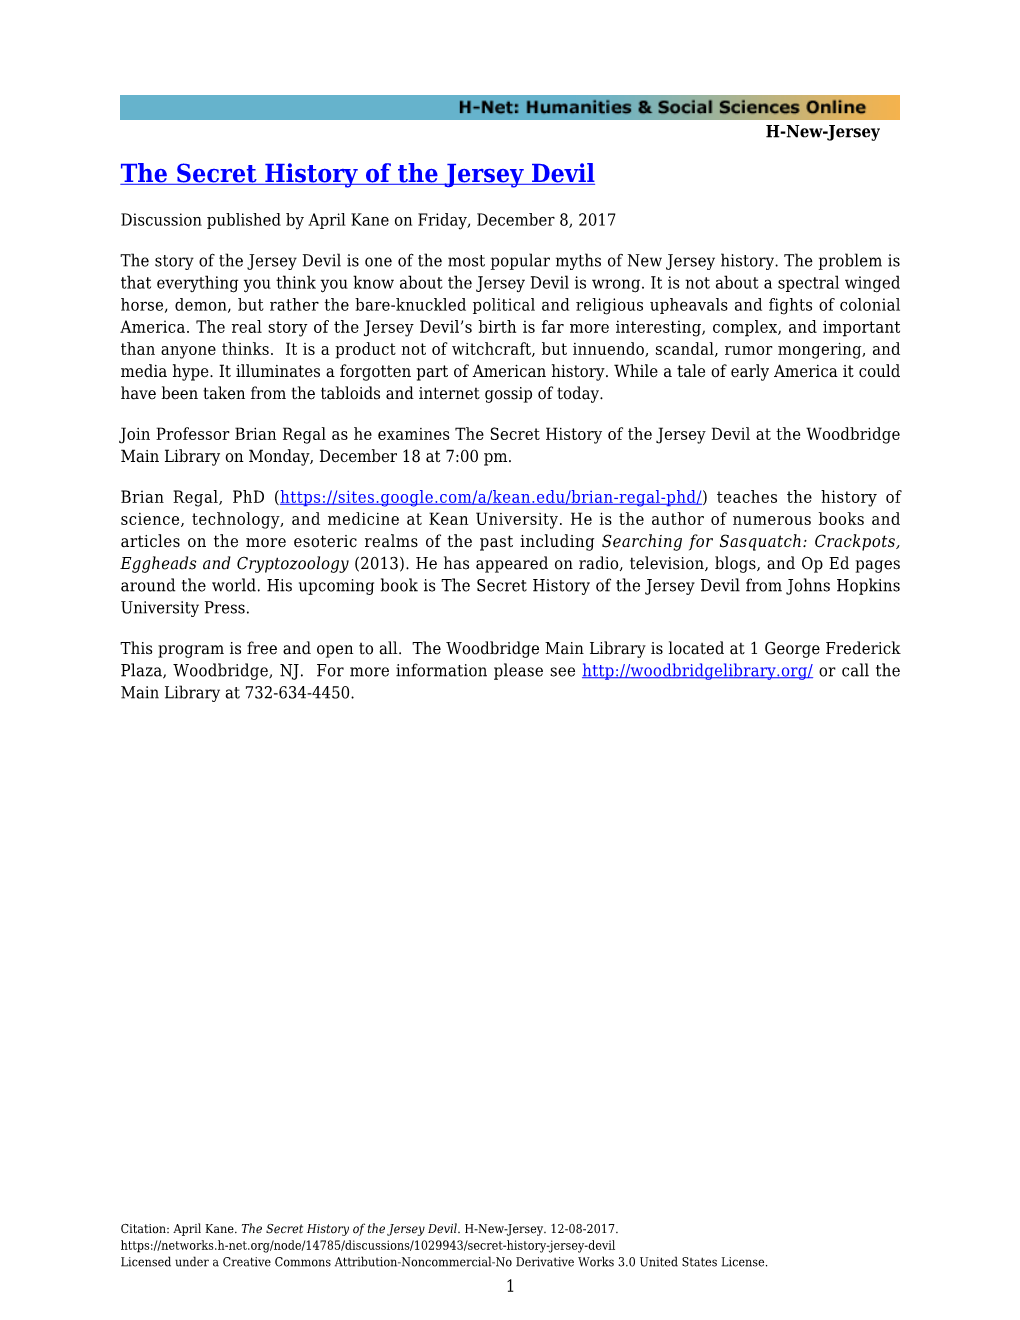 The Secret History of the Jersey Devil